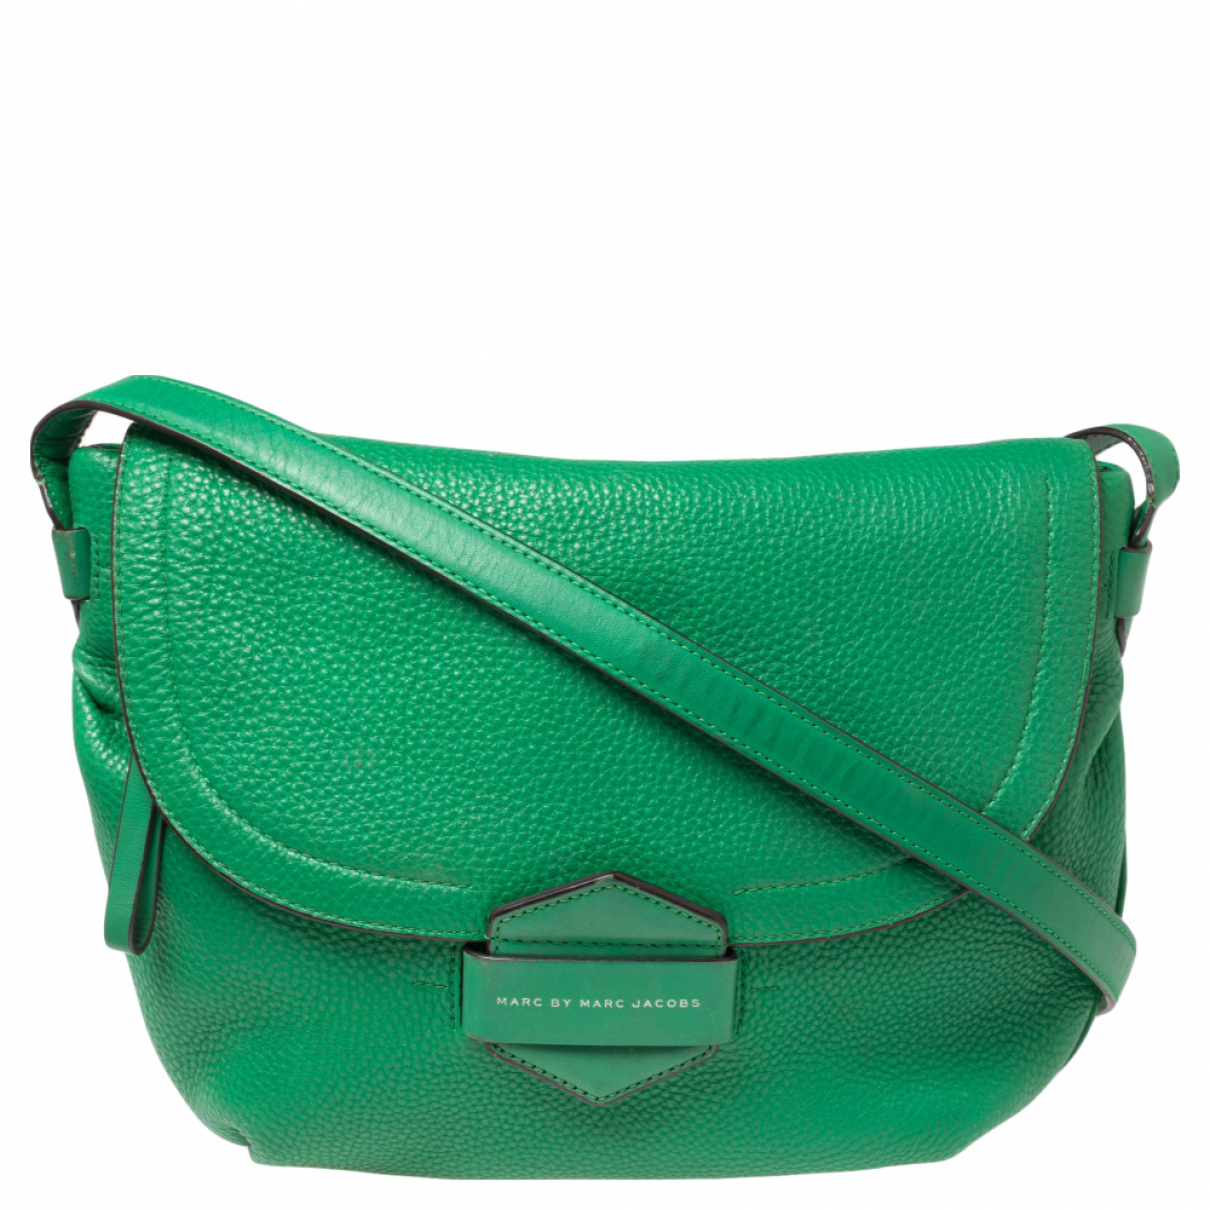 Leather Max 71% OFF handbag lowest price